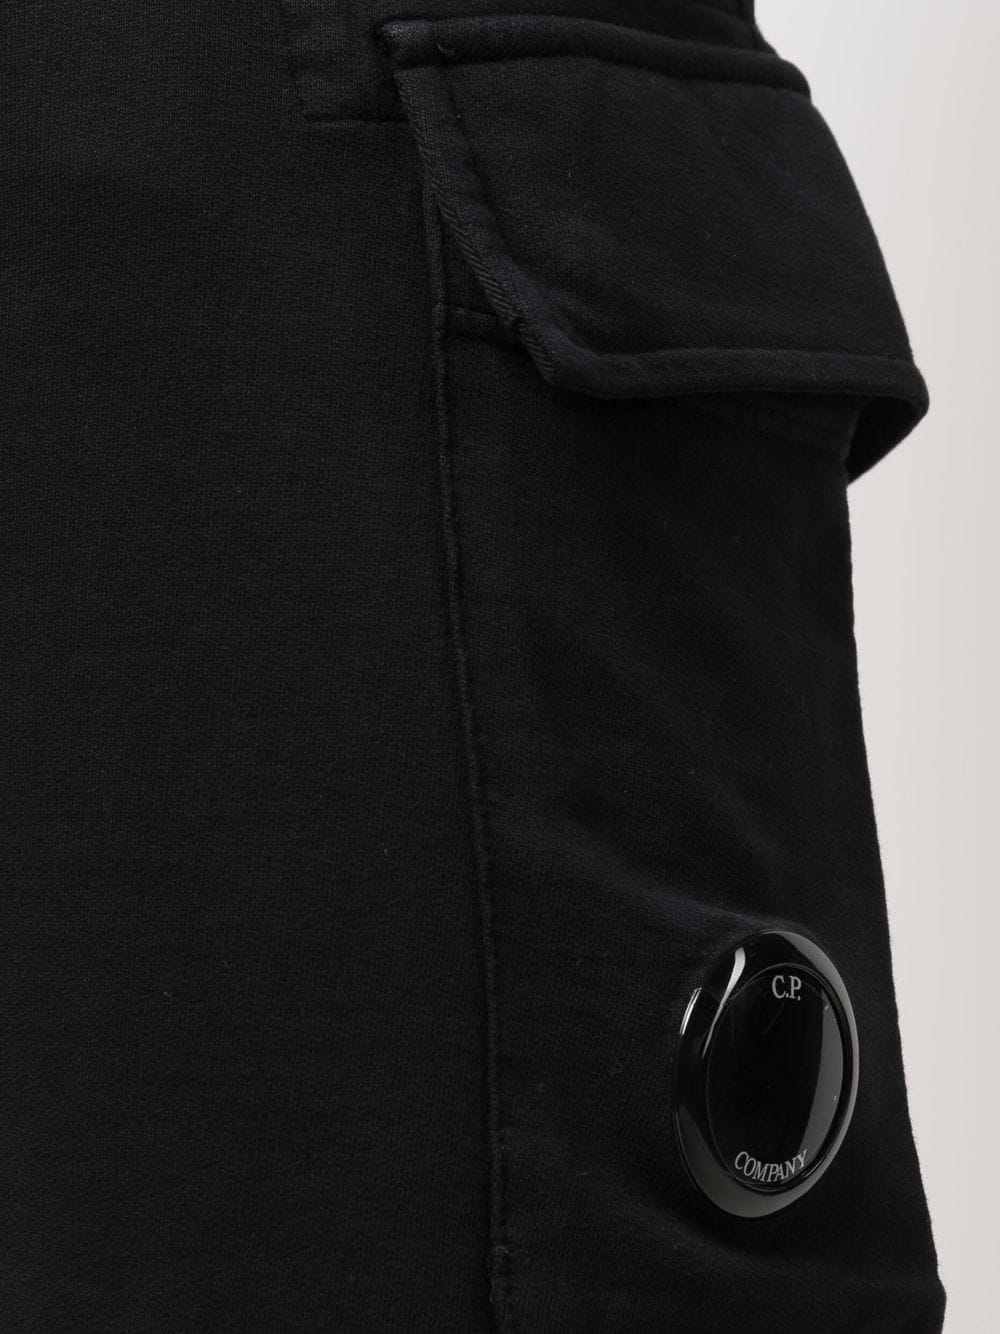 C.P. COMPANY Lens Pocket Shorts Black - MAISONDEFASHION.COM